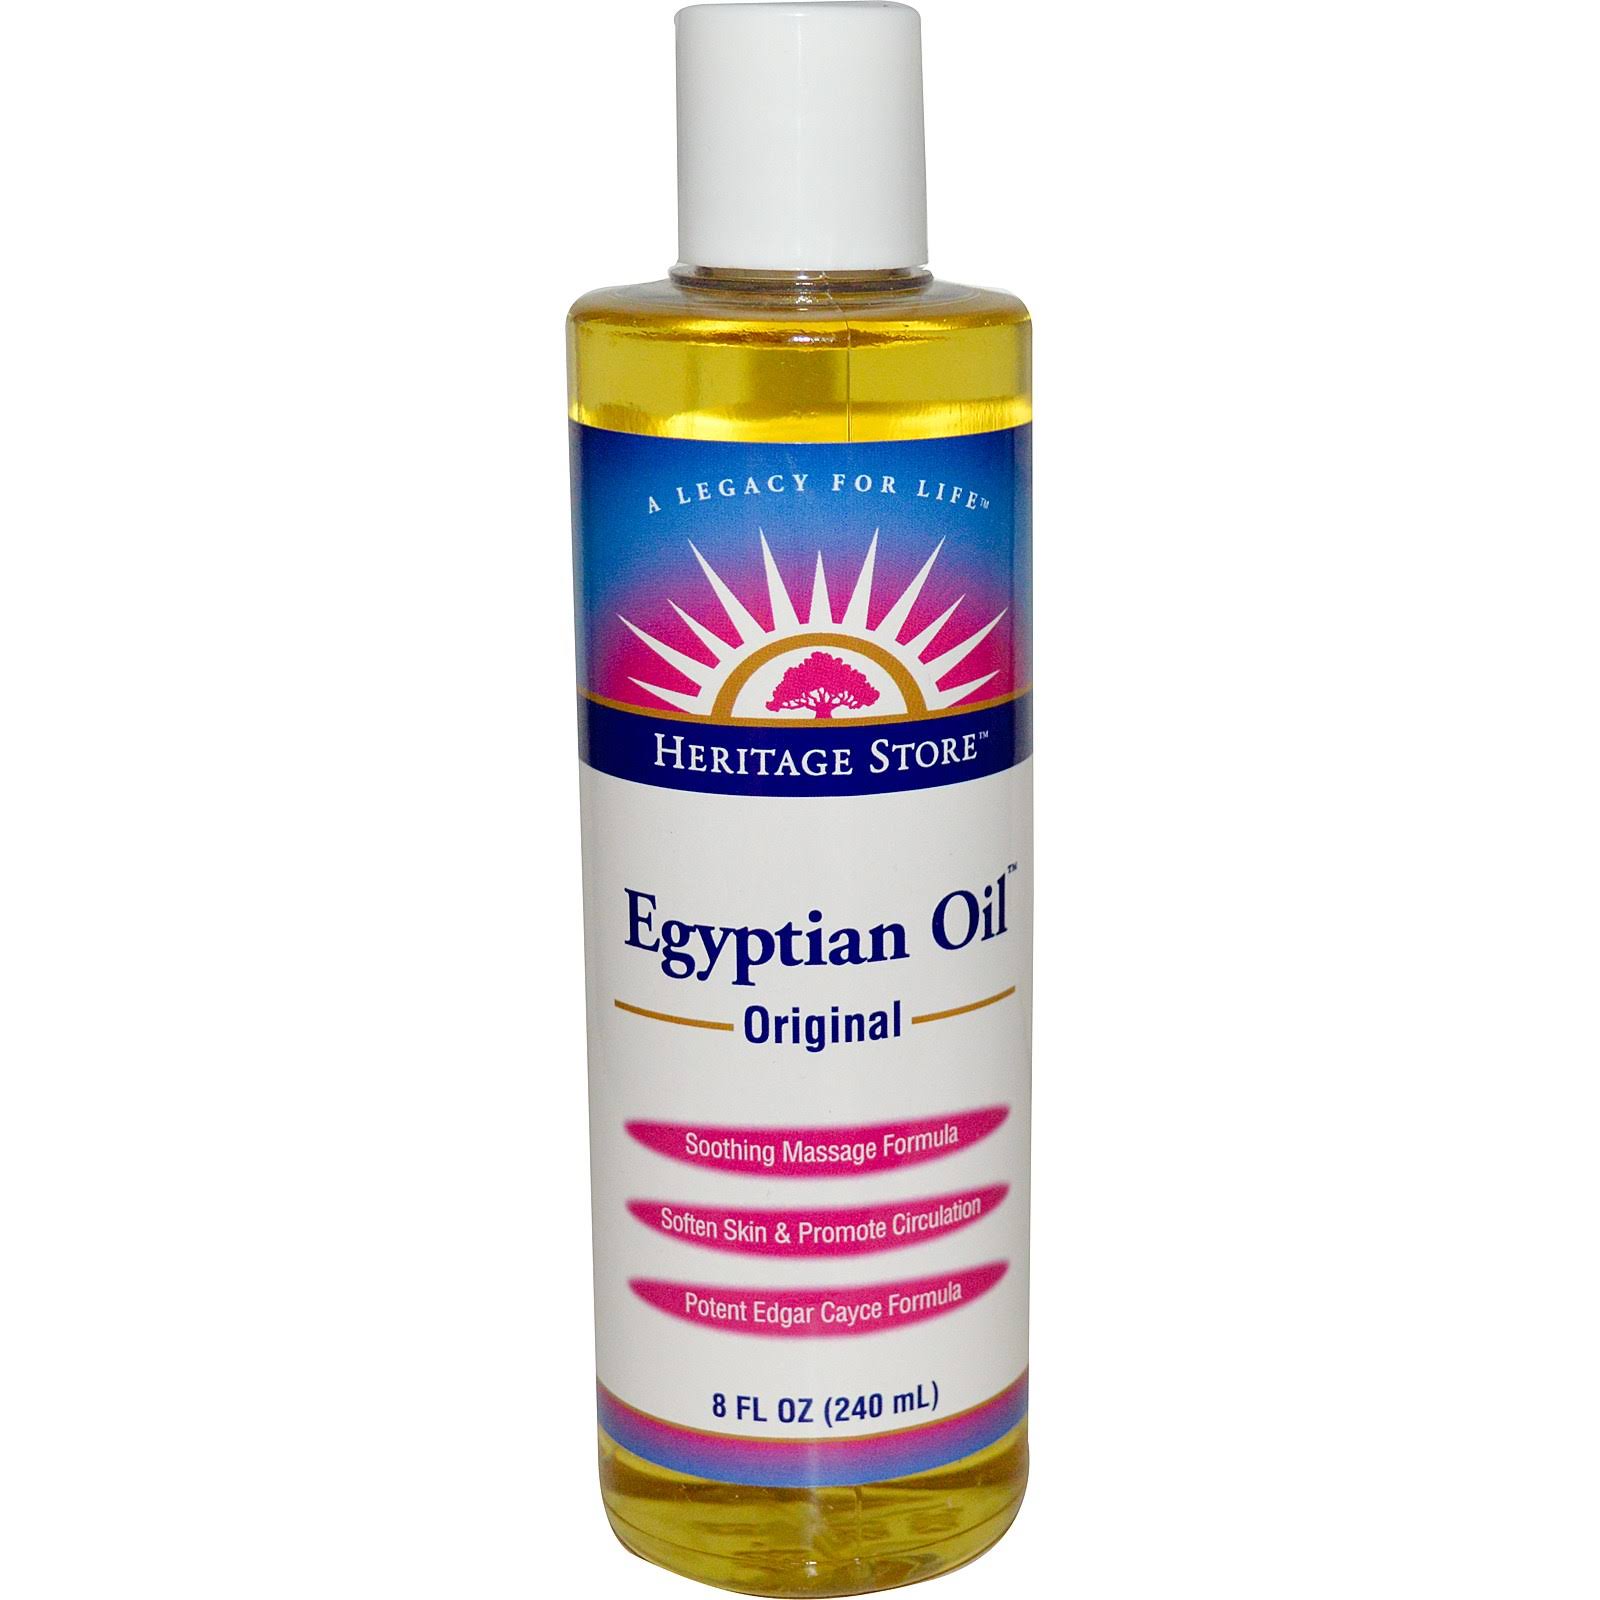 Heritage Store, Egyptian Oil, Original, 8 FL oz (240 ml)